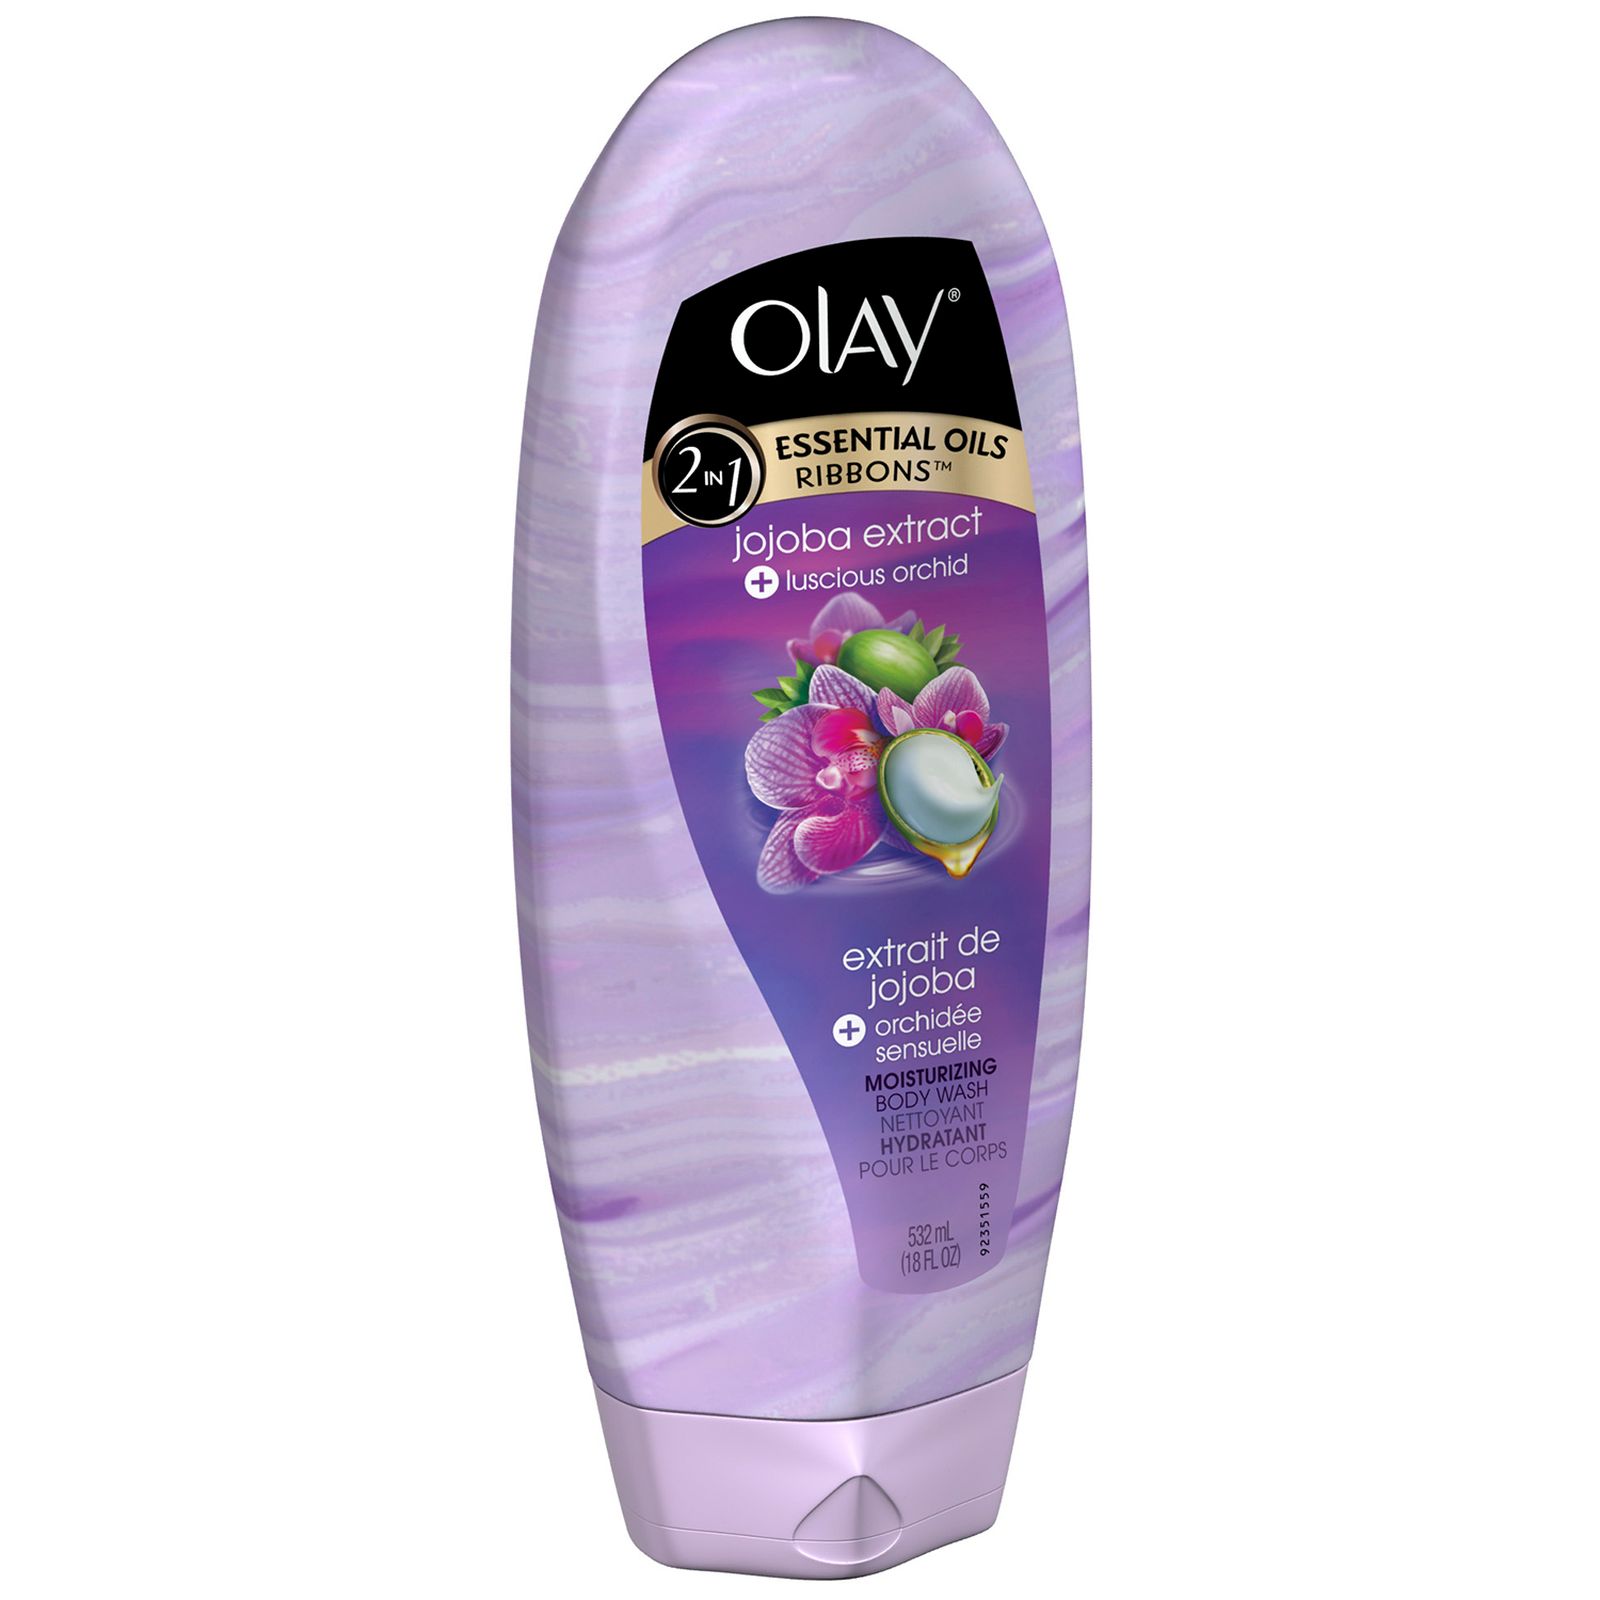 Olay Moisture Ribbons Plus Shea + Lavender Oil Body Wash, 18 fl oz